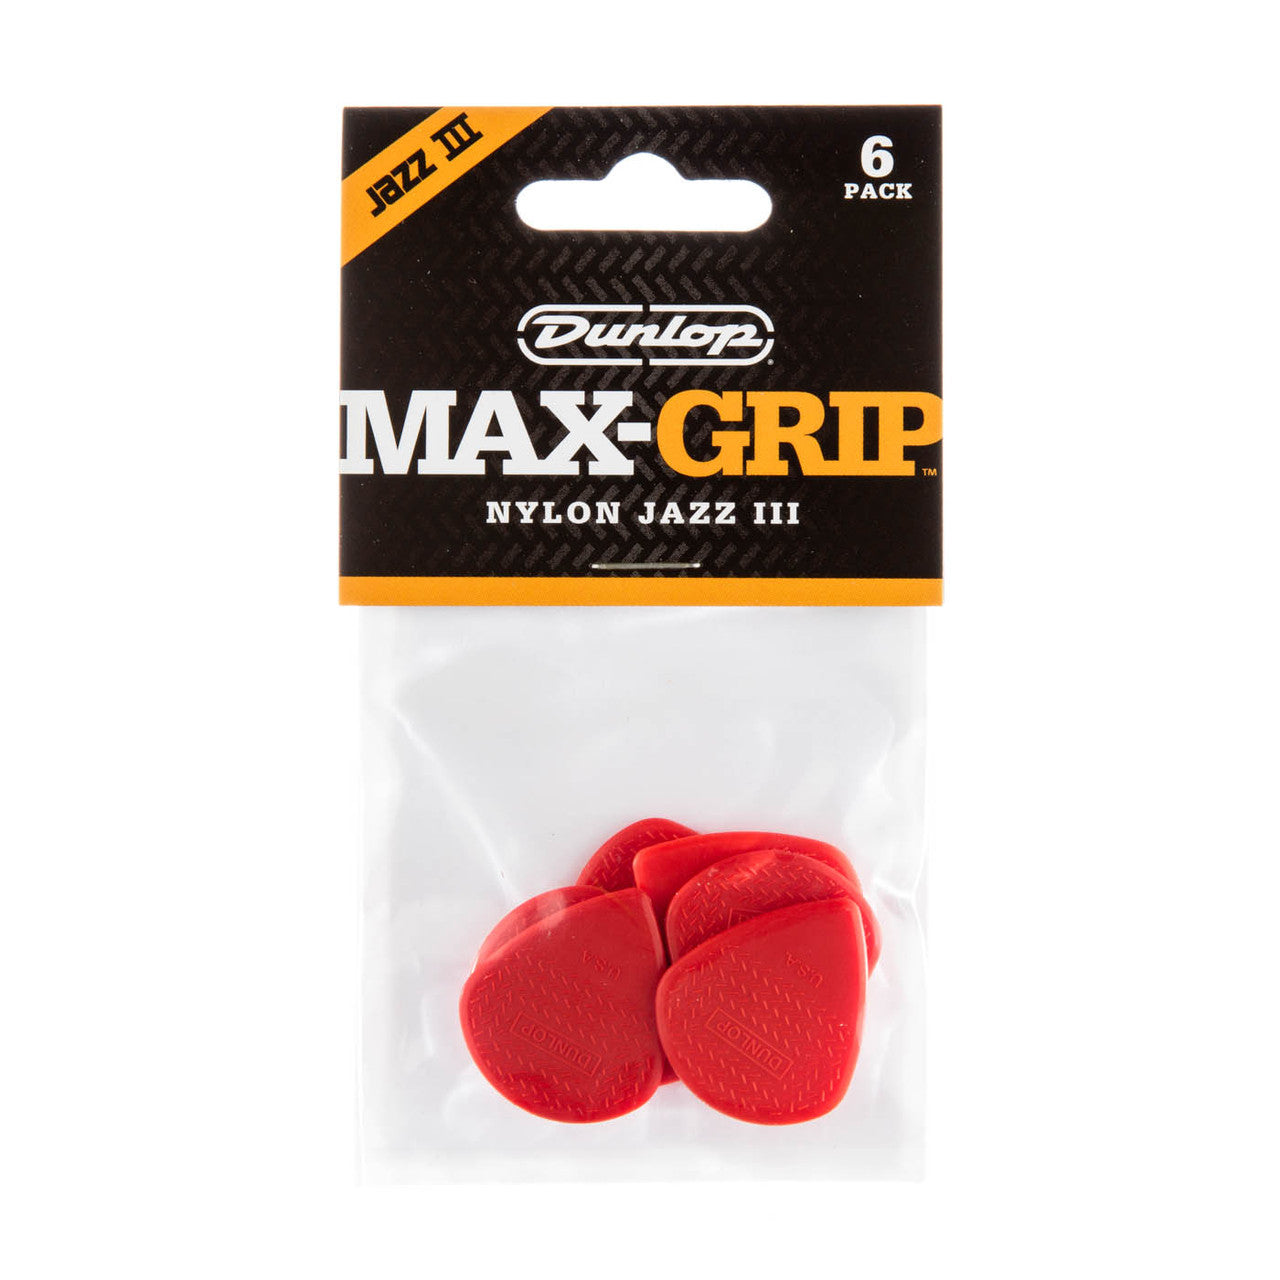 Dunlop Max Grip Nylon Jazz III Picks 6 Pack